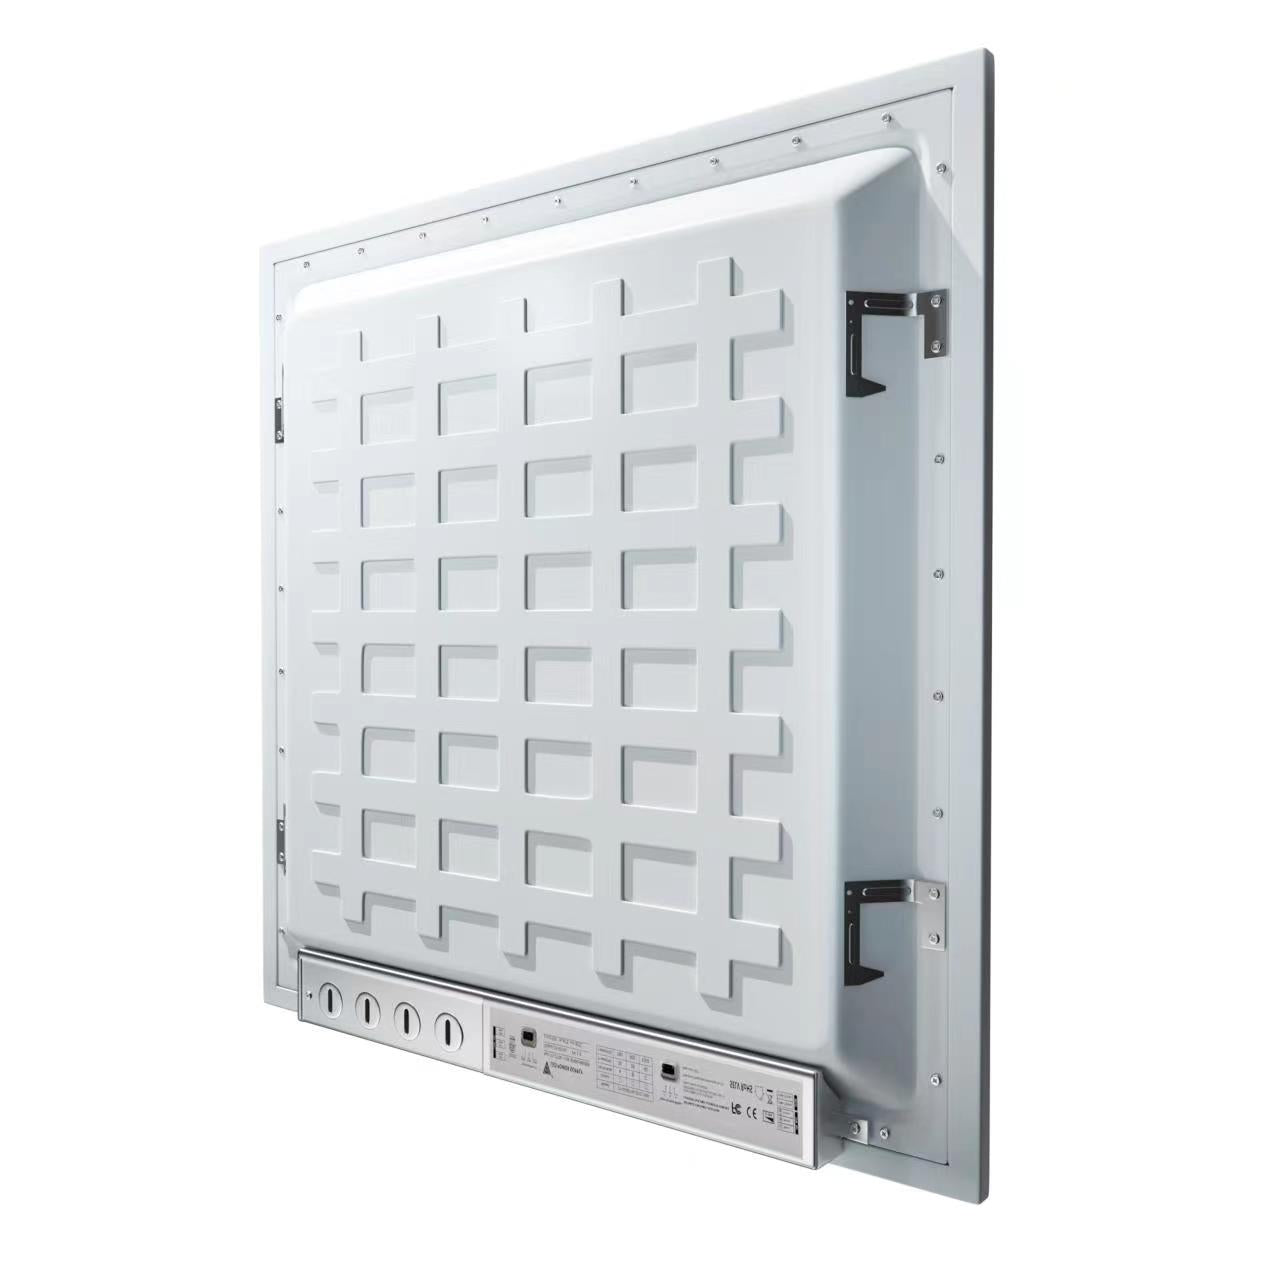 2x2 LED Panel (40W, 6500K) - Dimmable, Backlit, Daylight Glow 5000 Lumens, Recessed Mount, Sleek Design, DLC Certified